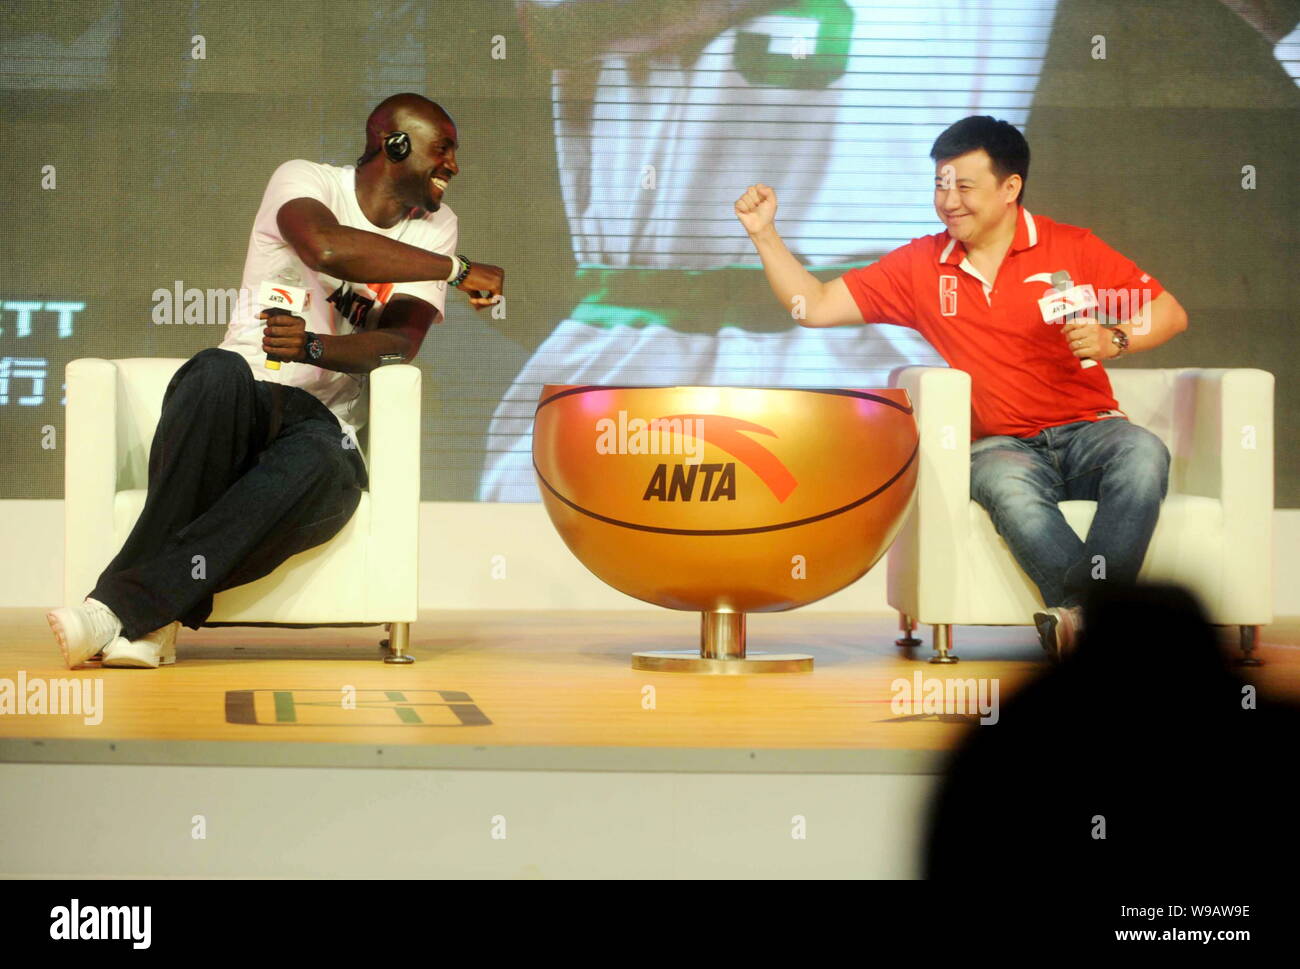 NBA basektball player Kevin Garnett of the Boston Celtics, left, and Zheng Jie, Executive Vice President of ANTA Sports Products Limited, greet each o Stock Photo